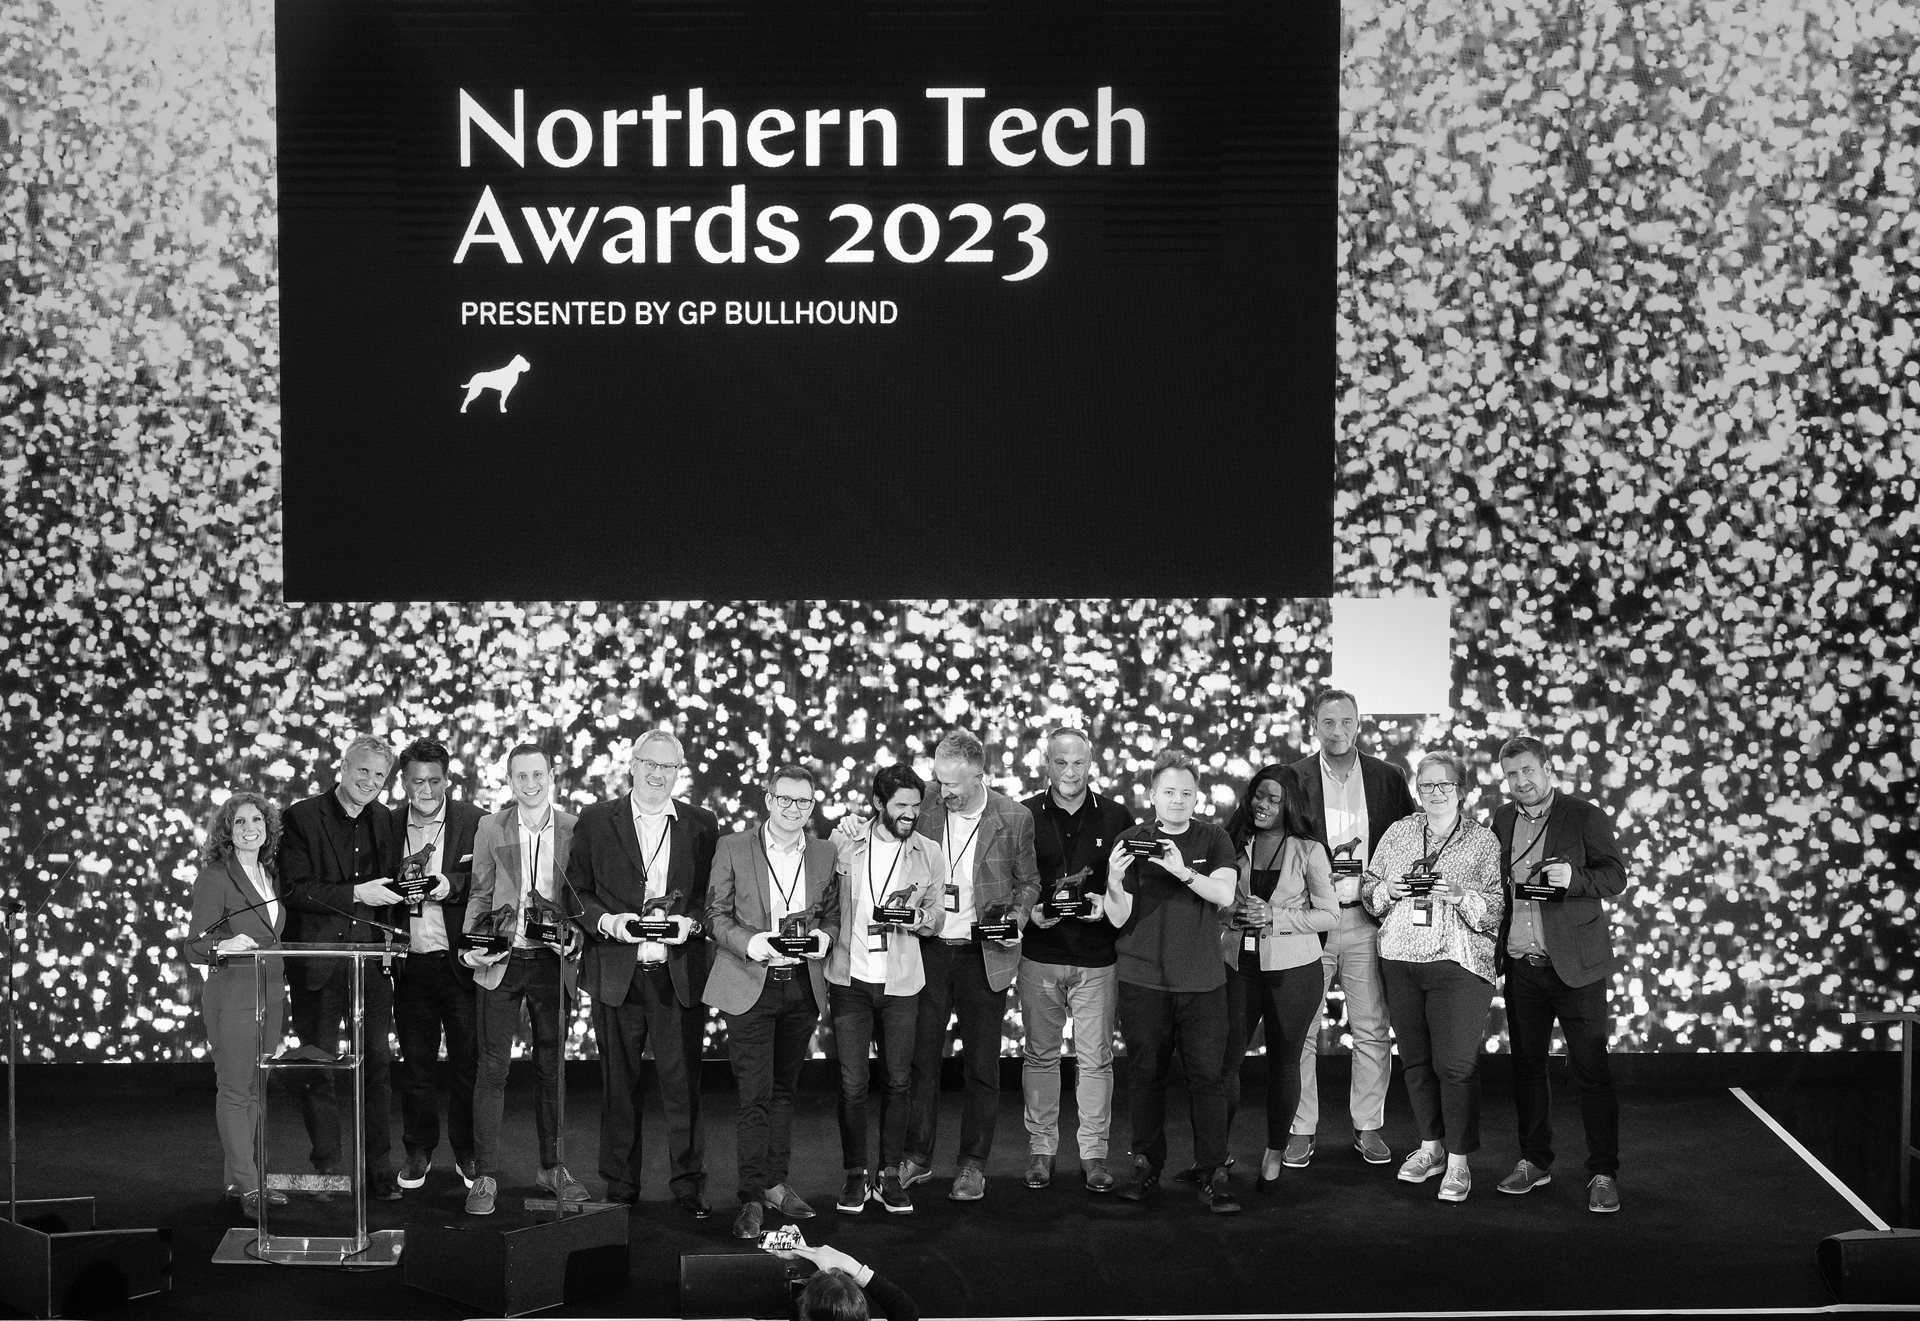 Northern Tech Awards 2023 winners announced. GP Bullhound